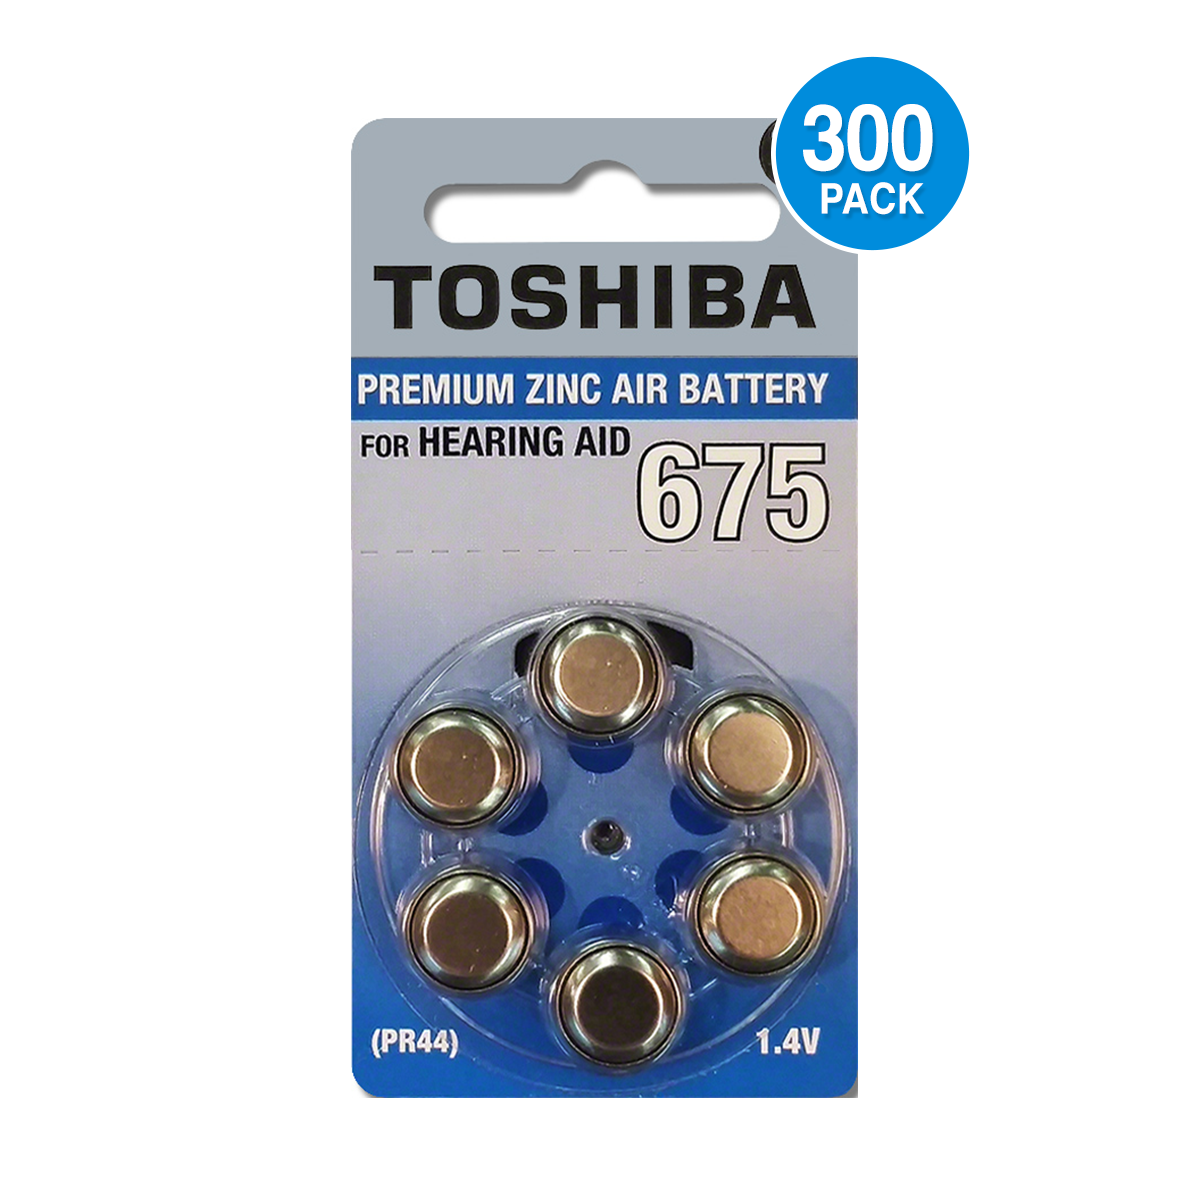 Toshiba Hearing Aid Battery, Size 675 (300 Pc)